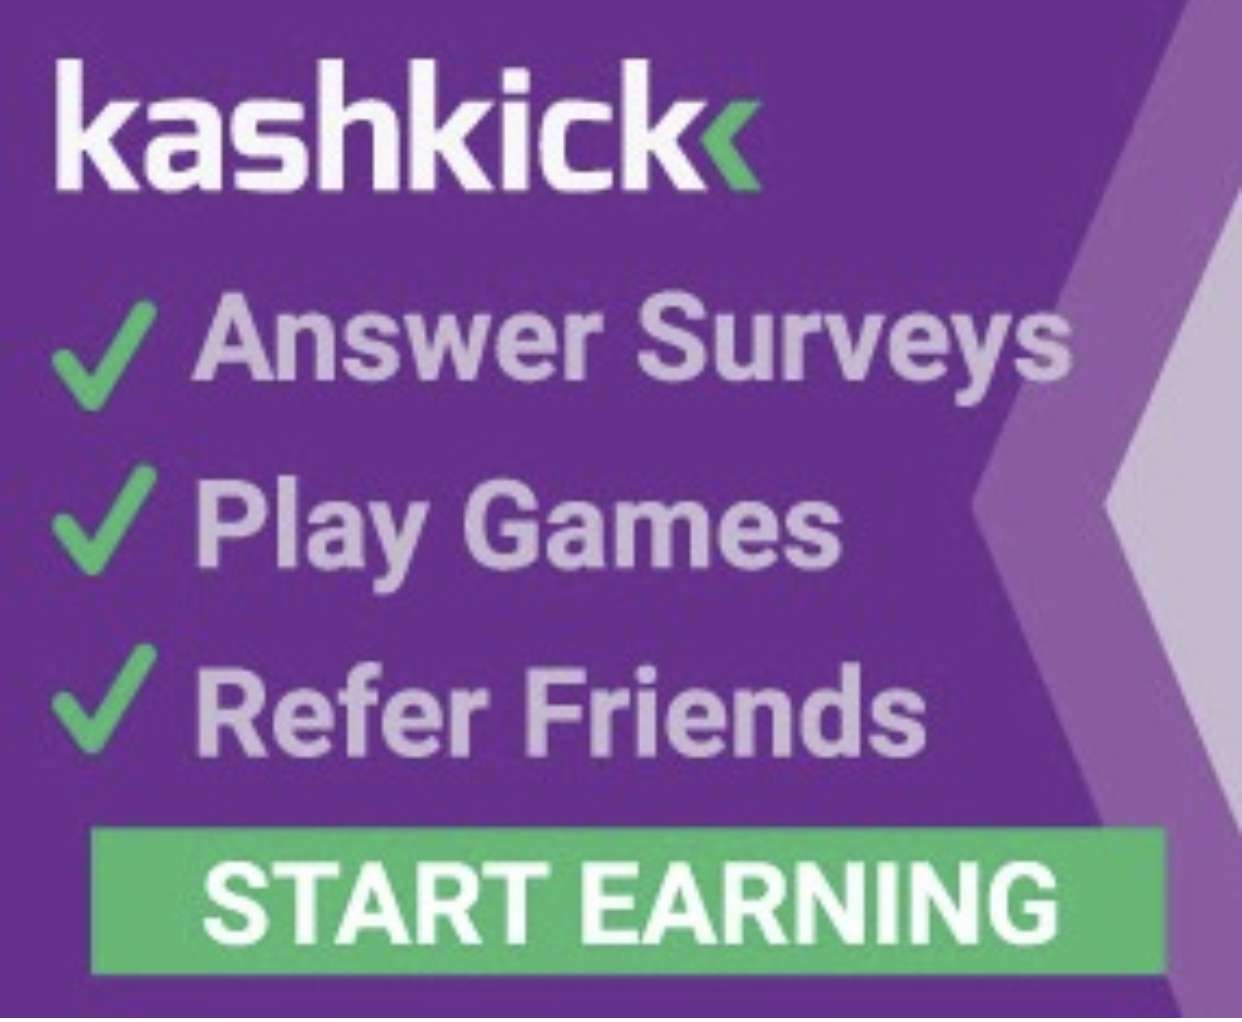 Kashkick anket sitesi